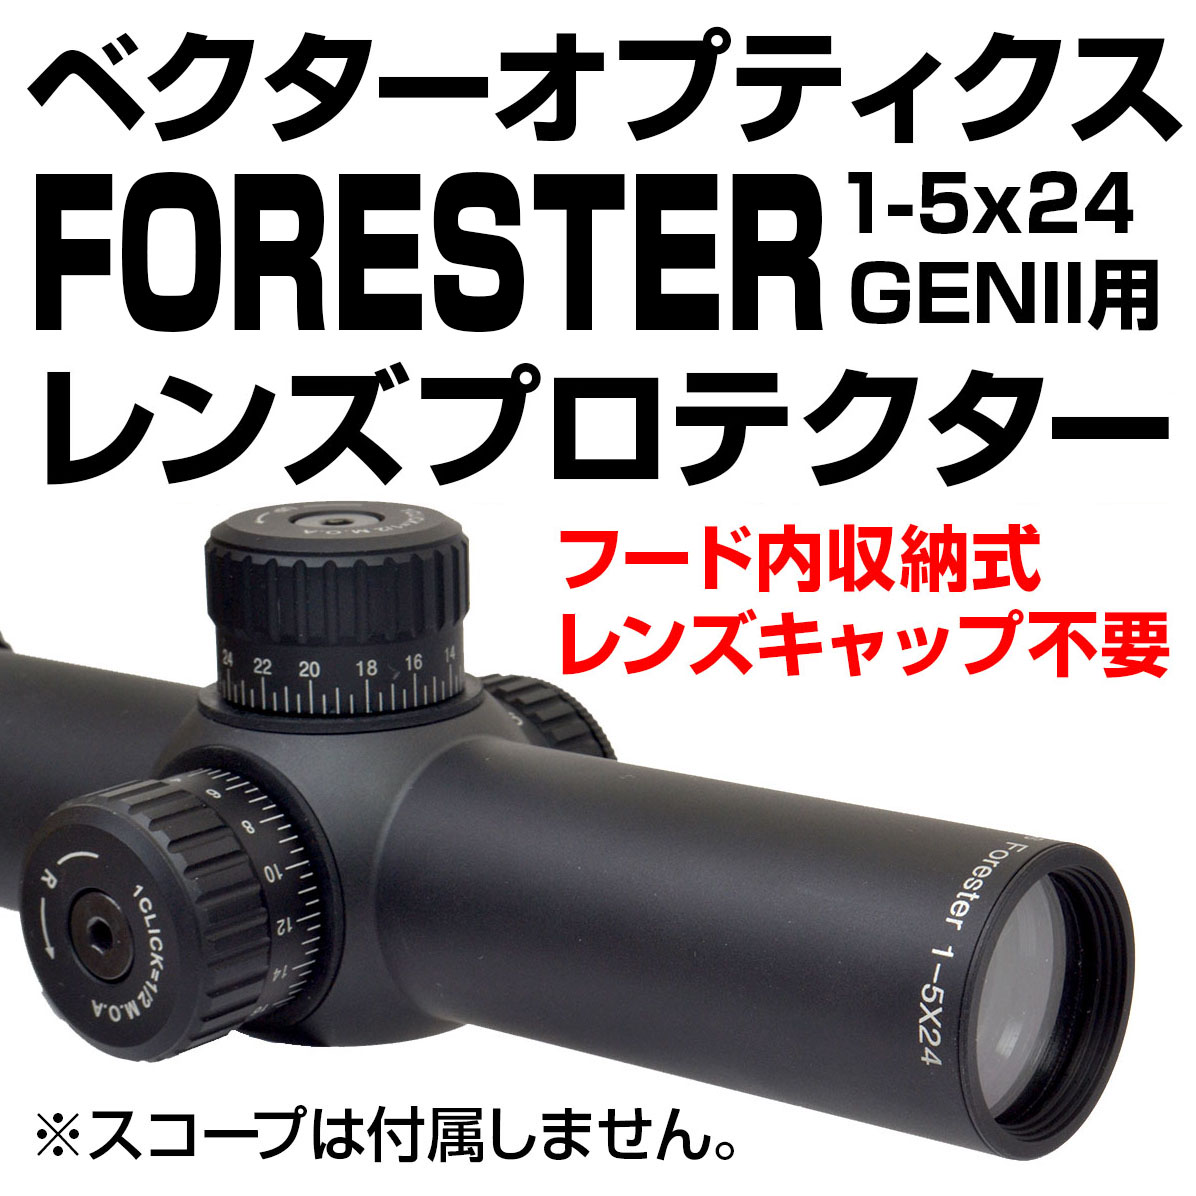 VectorOptics FORESTER 1-5x24 GENII用プロテクター | あきゅらぼ通販